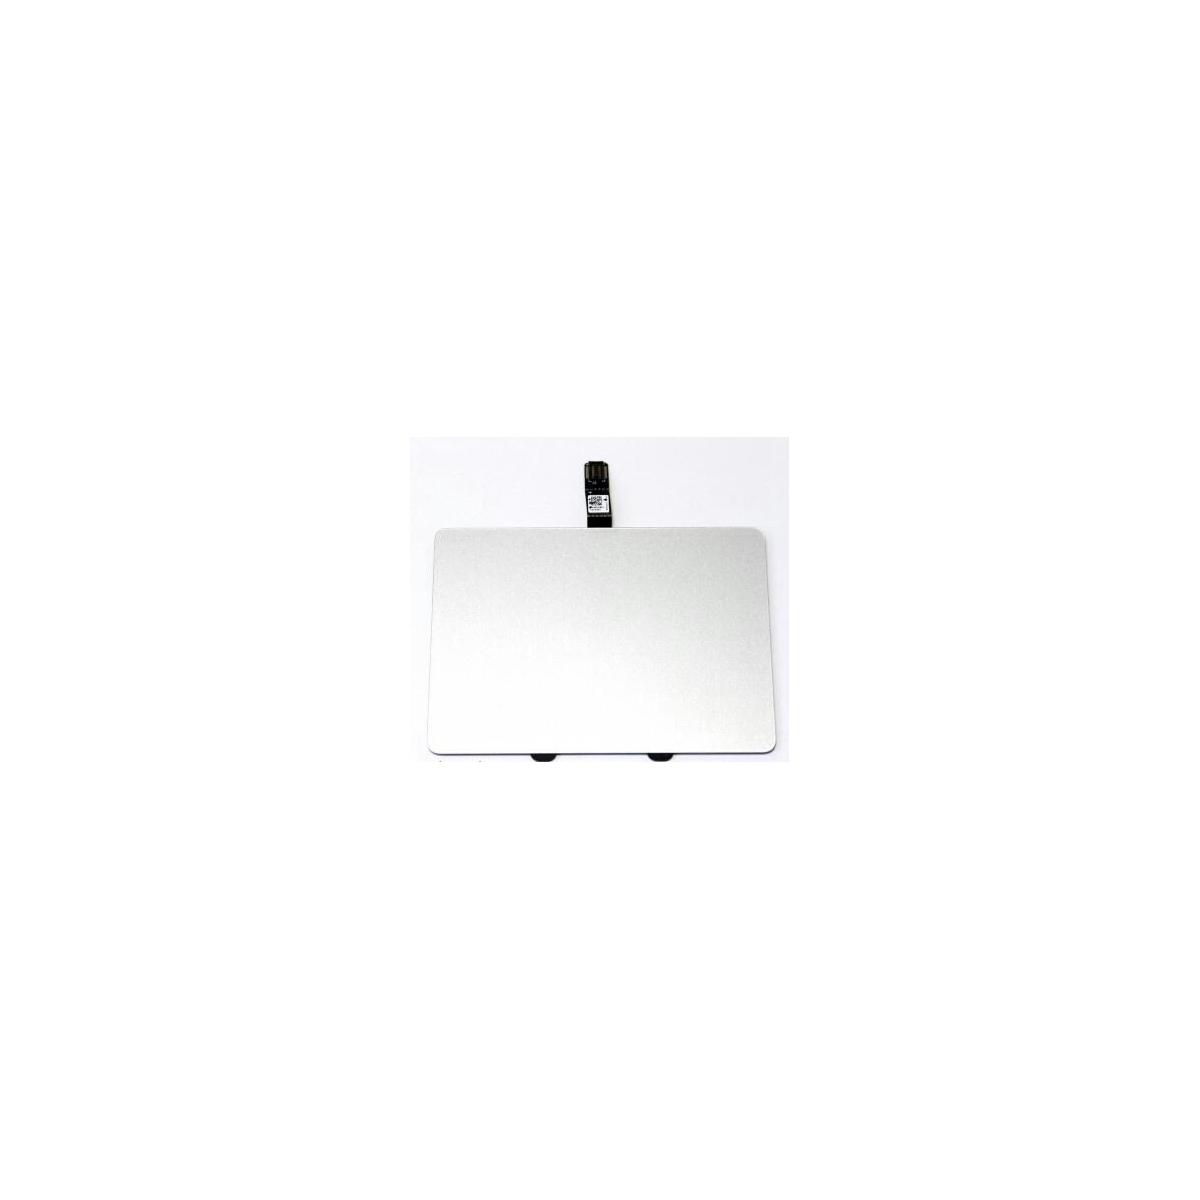 Jual Trackpad Macbook Pro 13 inchi Original